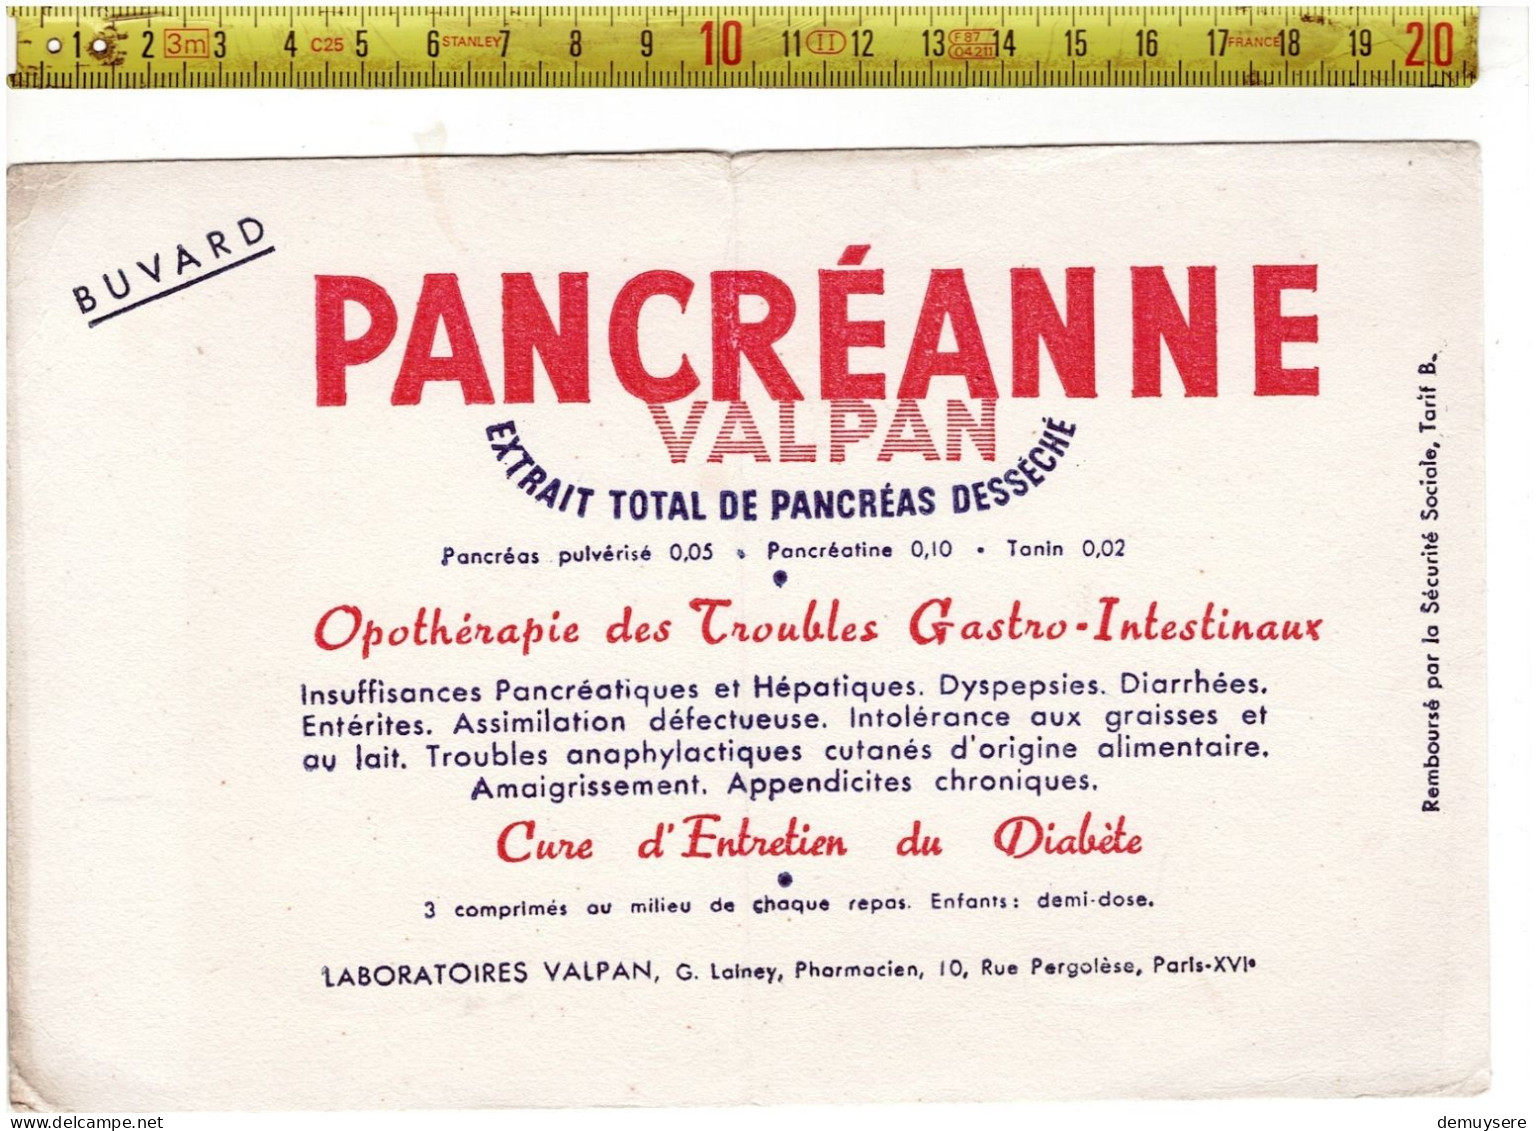 SOLDE 2012 - BUVARD - PANCREANNE VALPAN - Chemist's